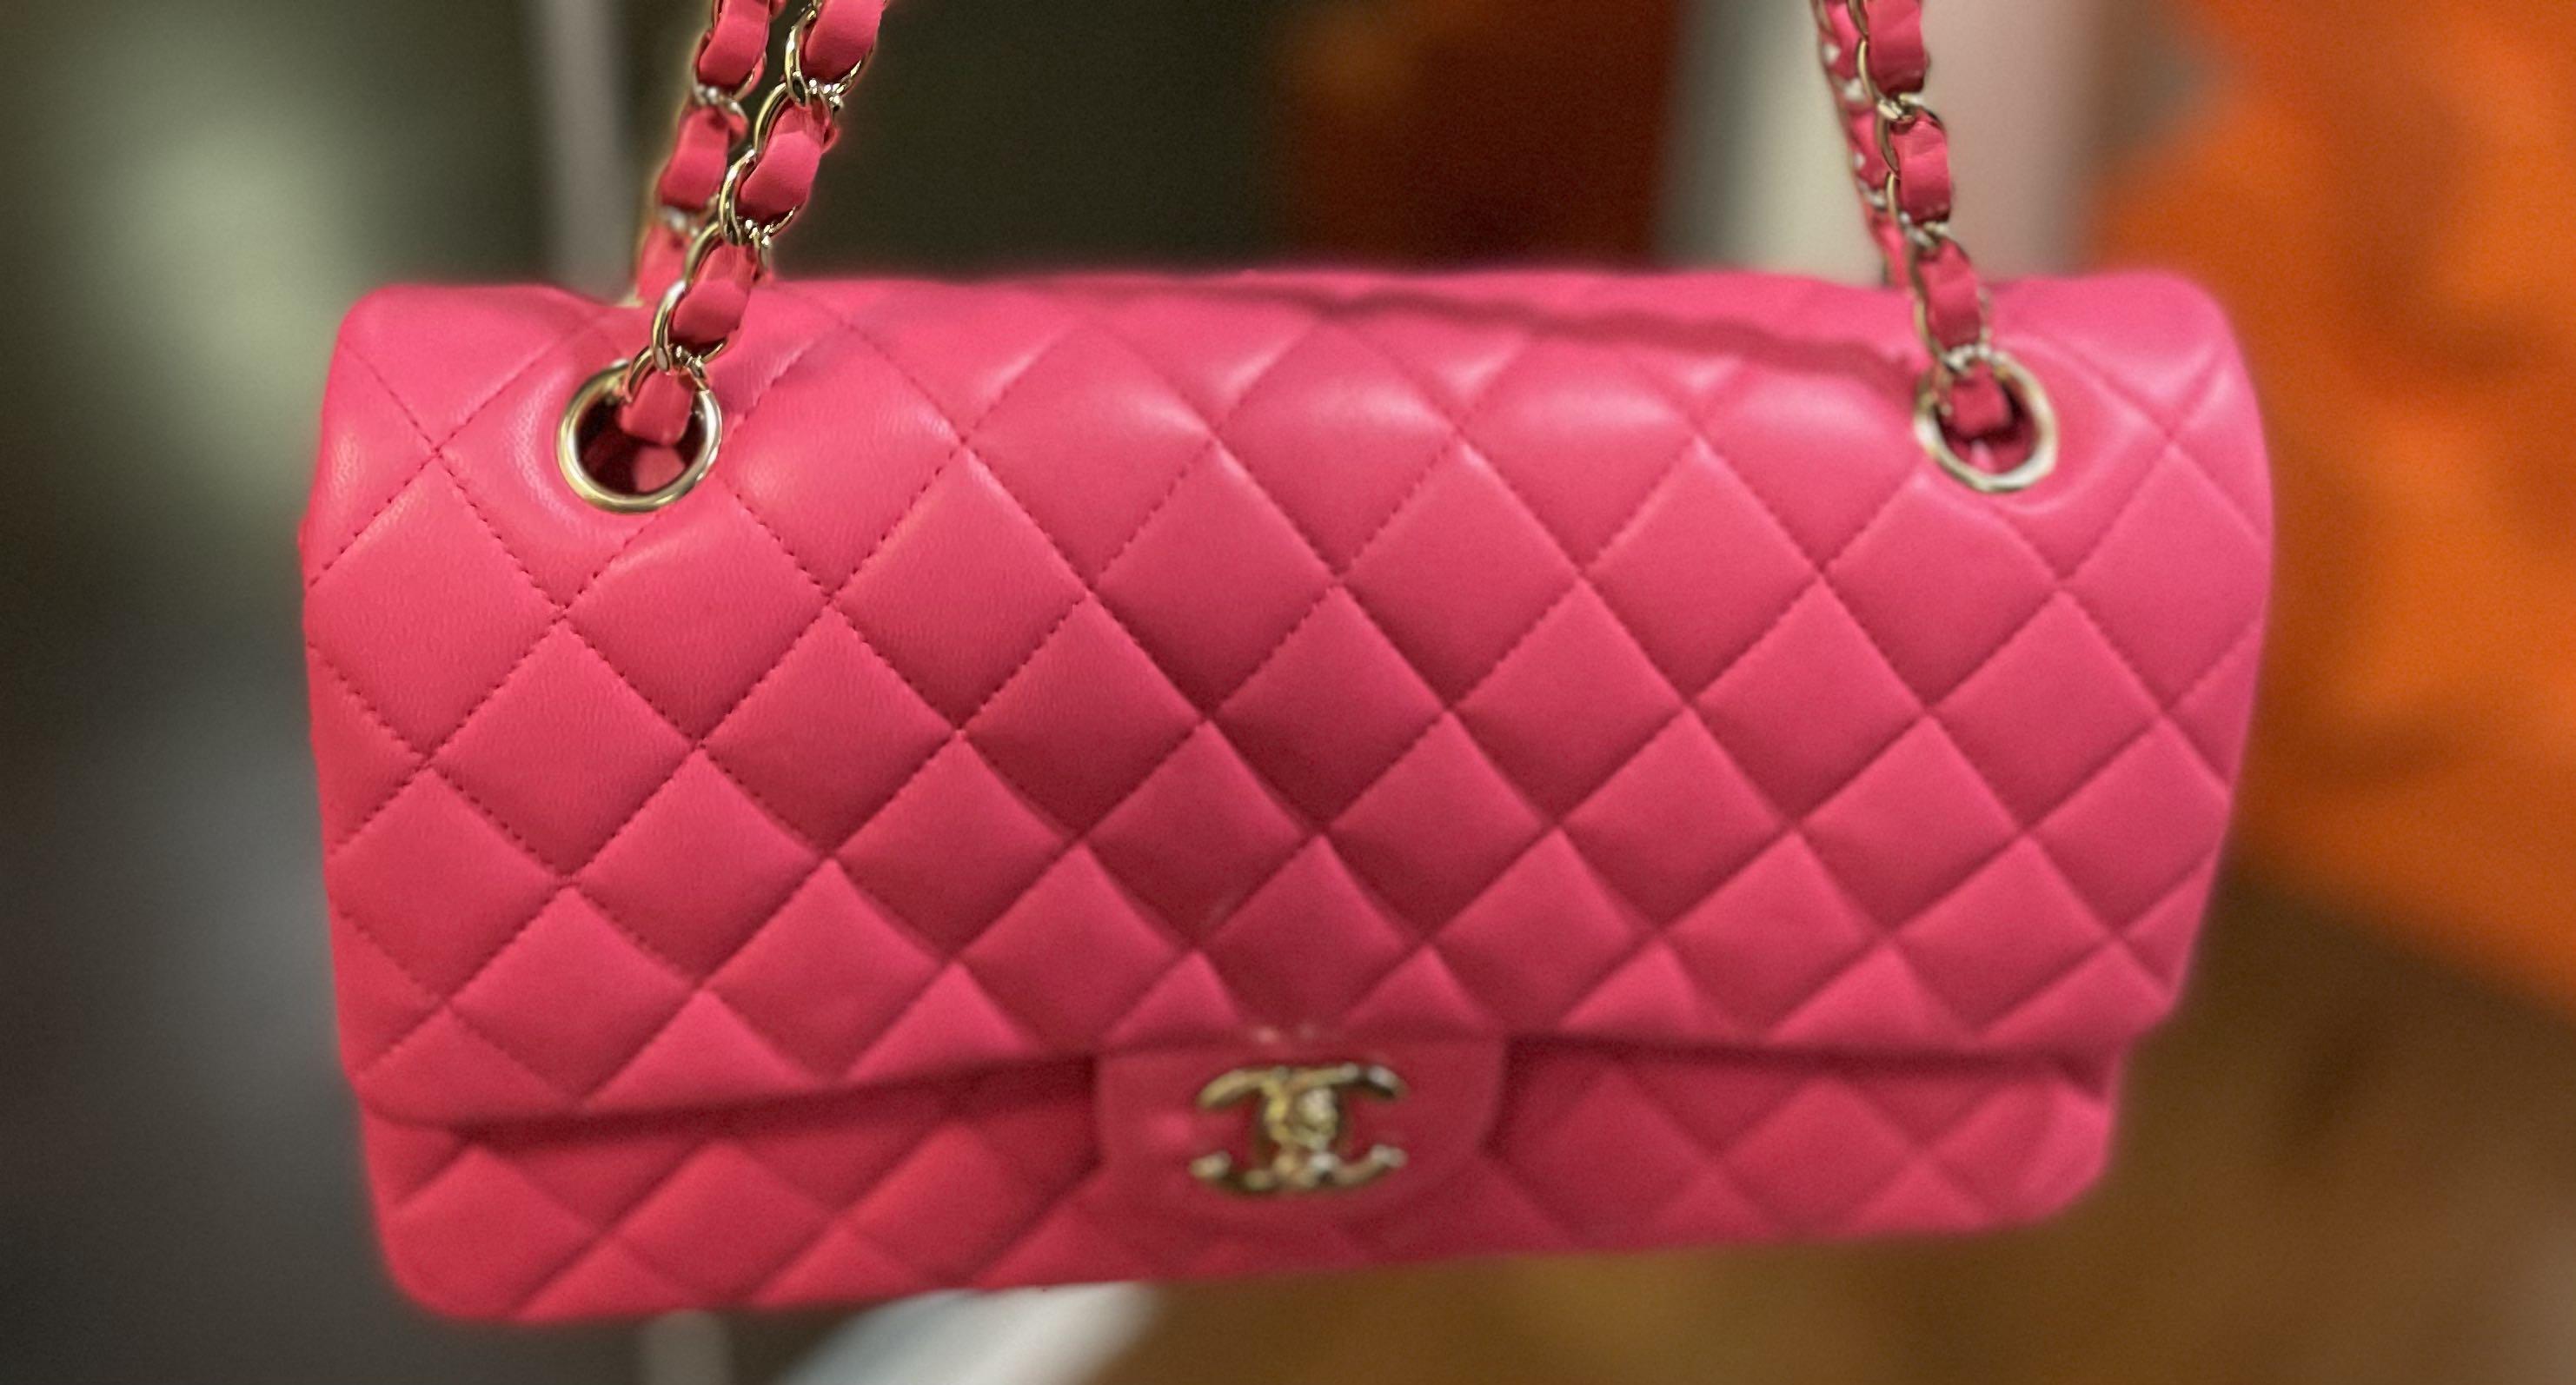 Classic Chanel flap medium in hot pink. Lambskin, Women's Fashion